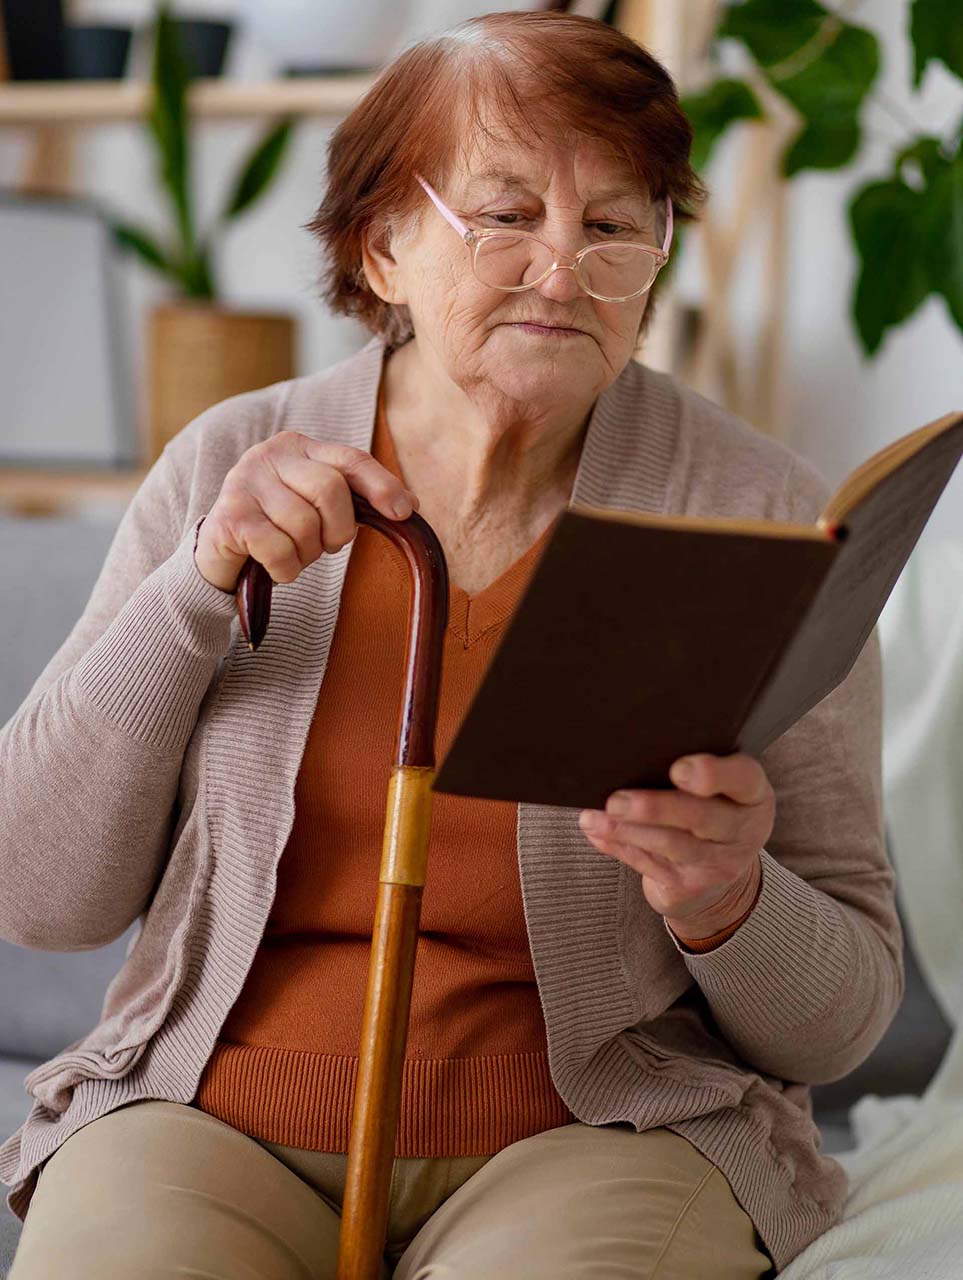 Live peace seniors, Old woman reading book, senior care educational blogs